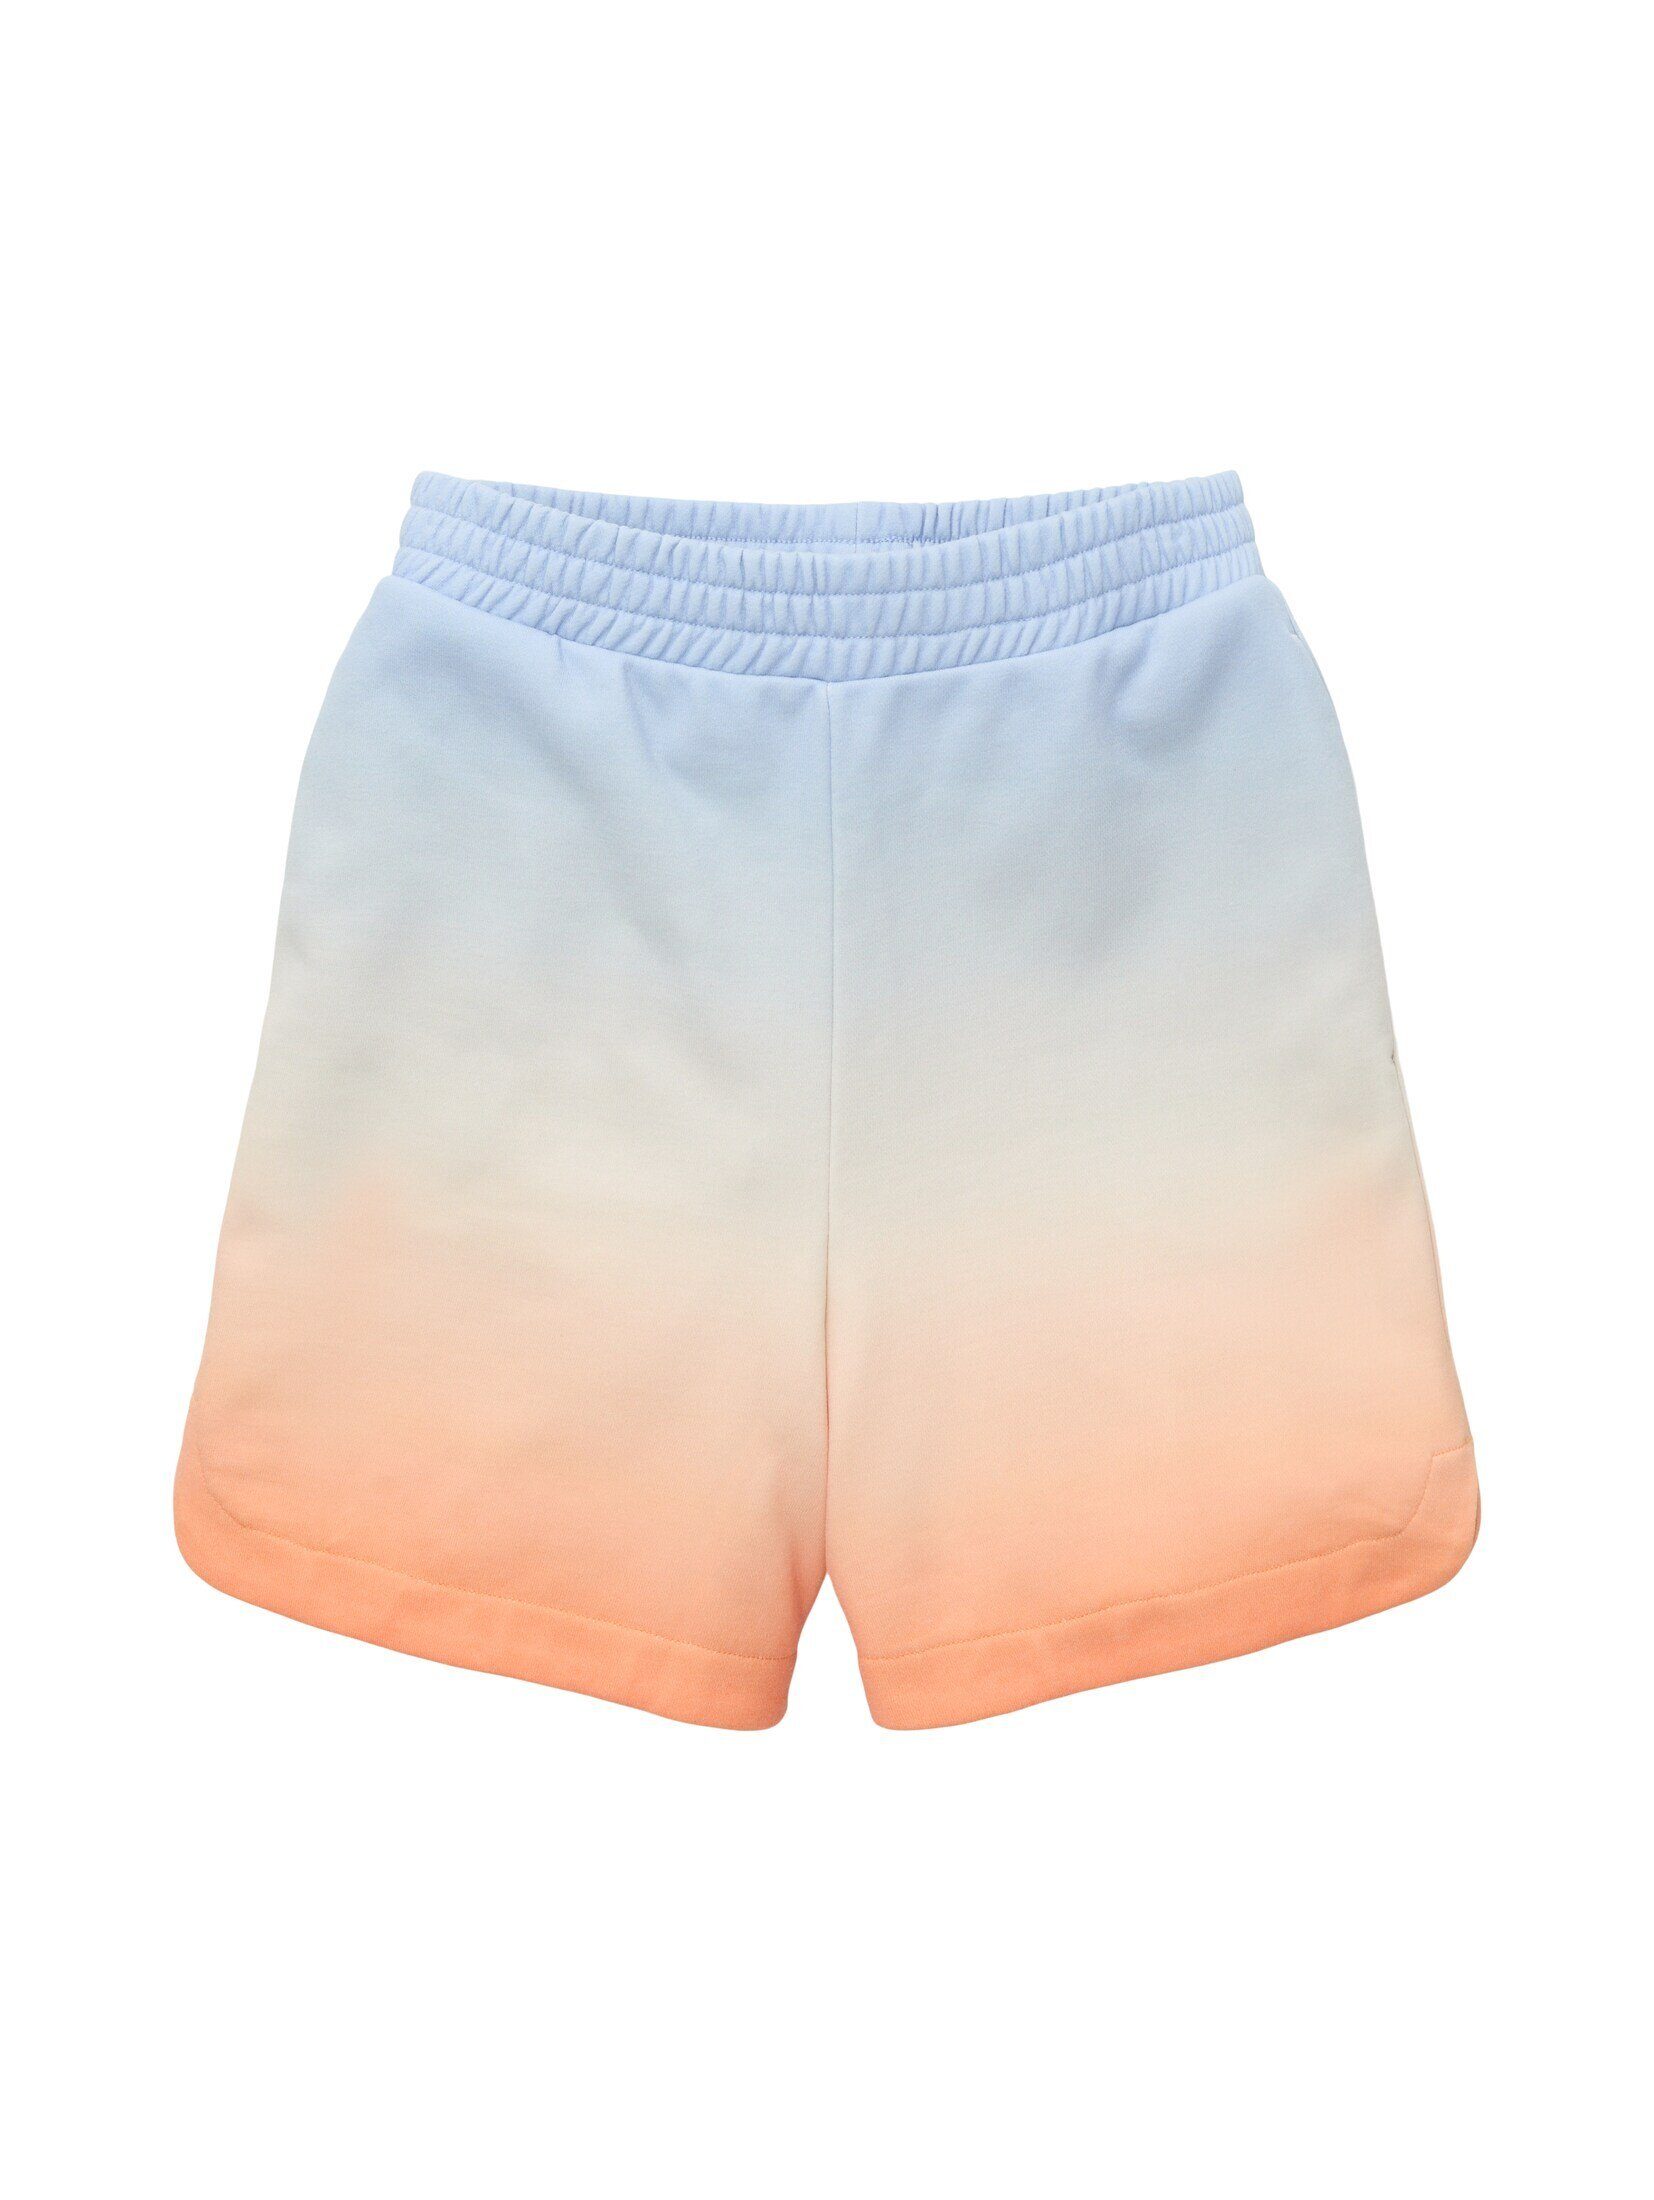 TOM TAILOR Denim Bermudas Shorts mit Farbverlauf